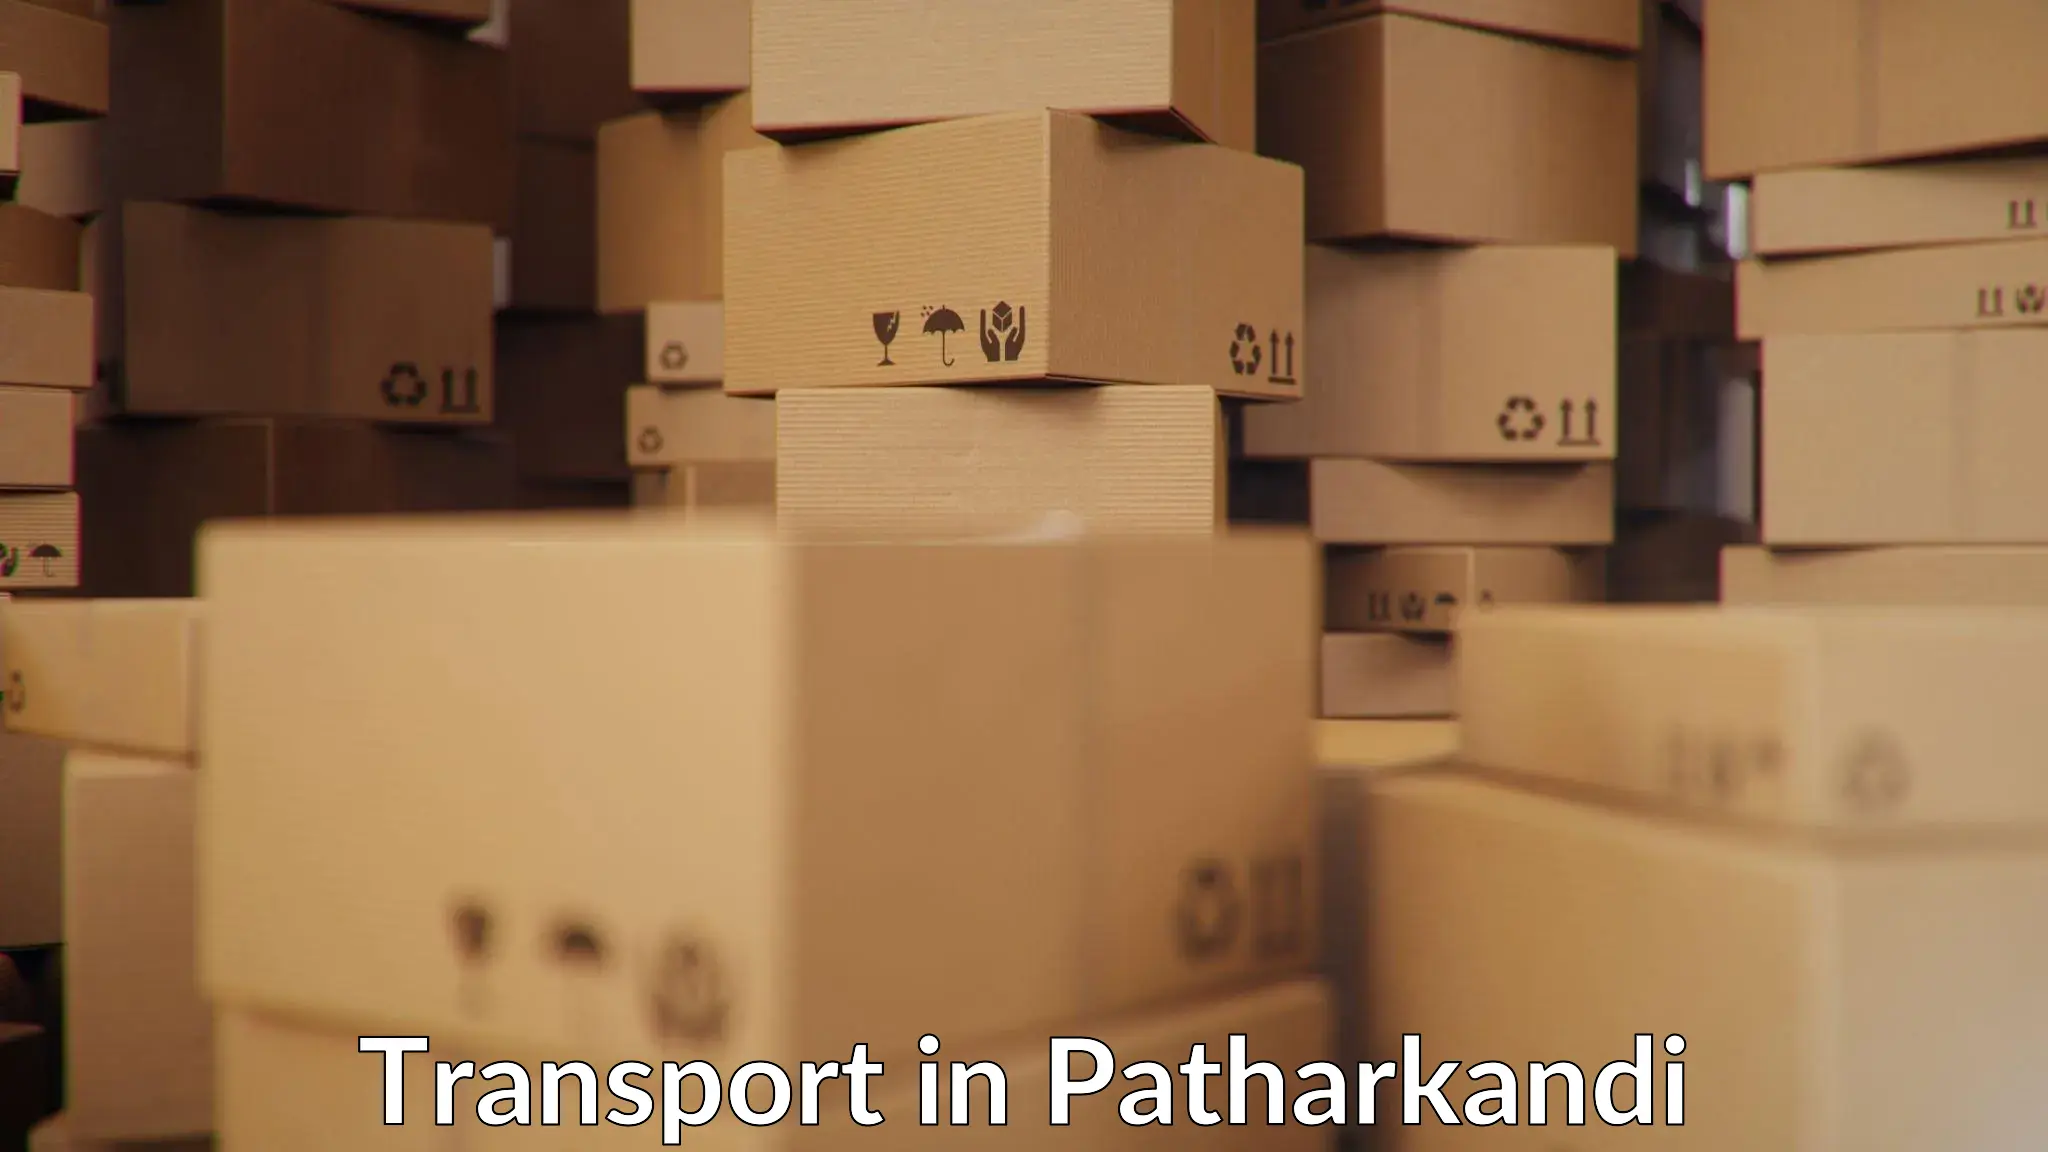 Furniture transport service in Patharkandi